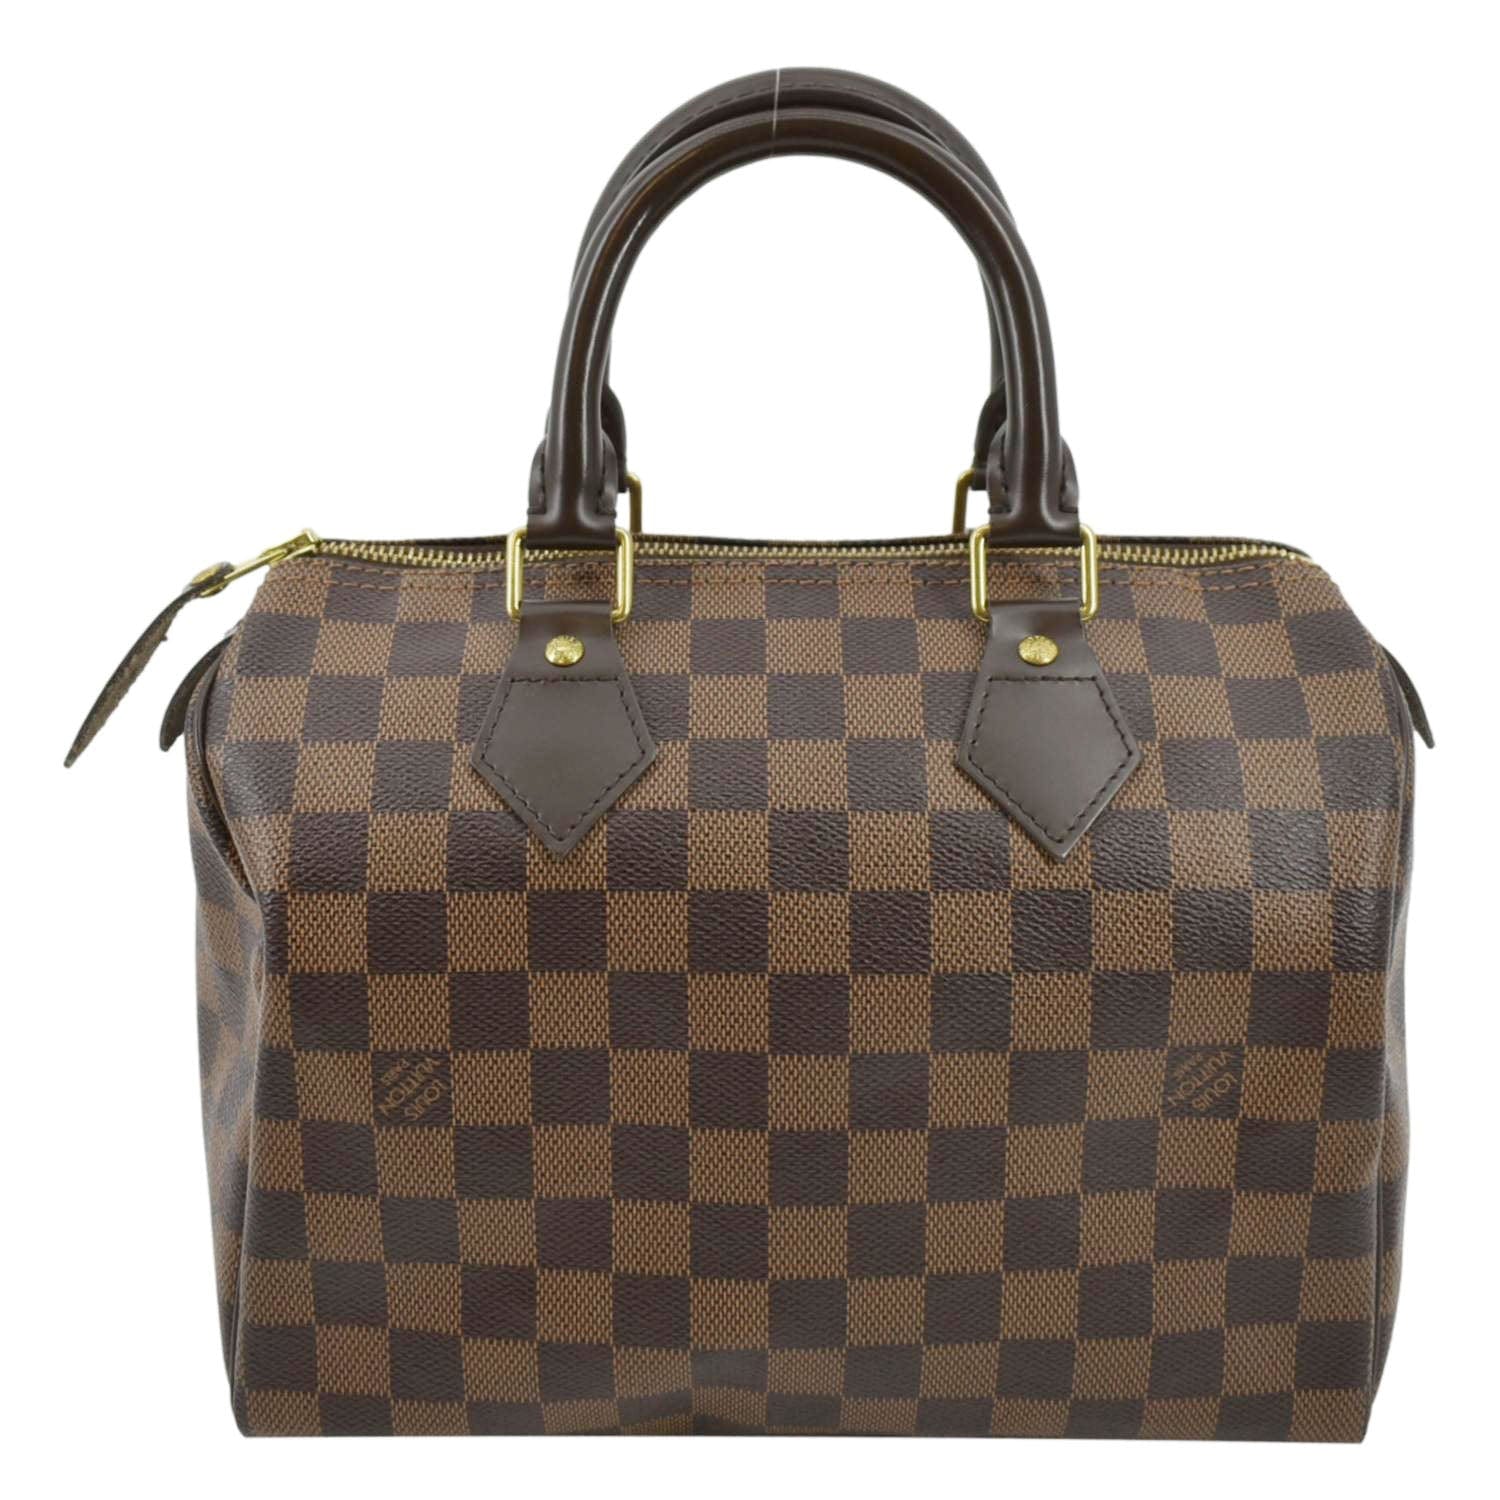 Louis Vuitton Speedy 25 Damier Ebene Handbag